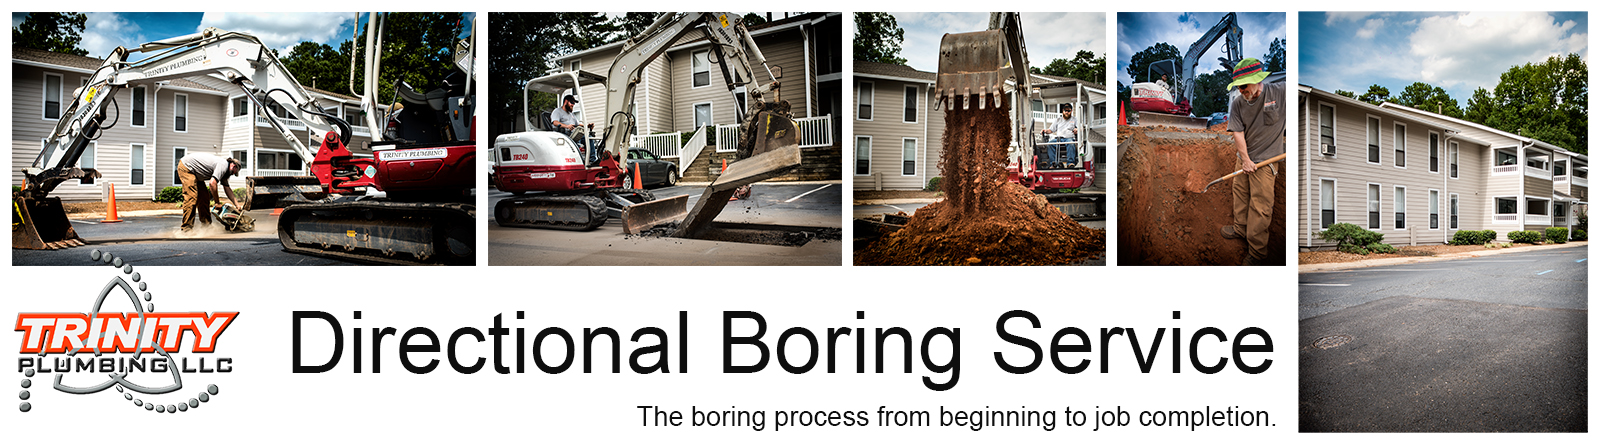 Directional Boring process for trinity plumbing llc home service marketing